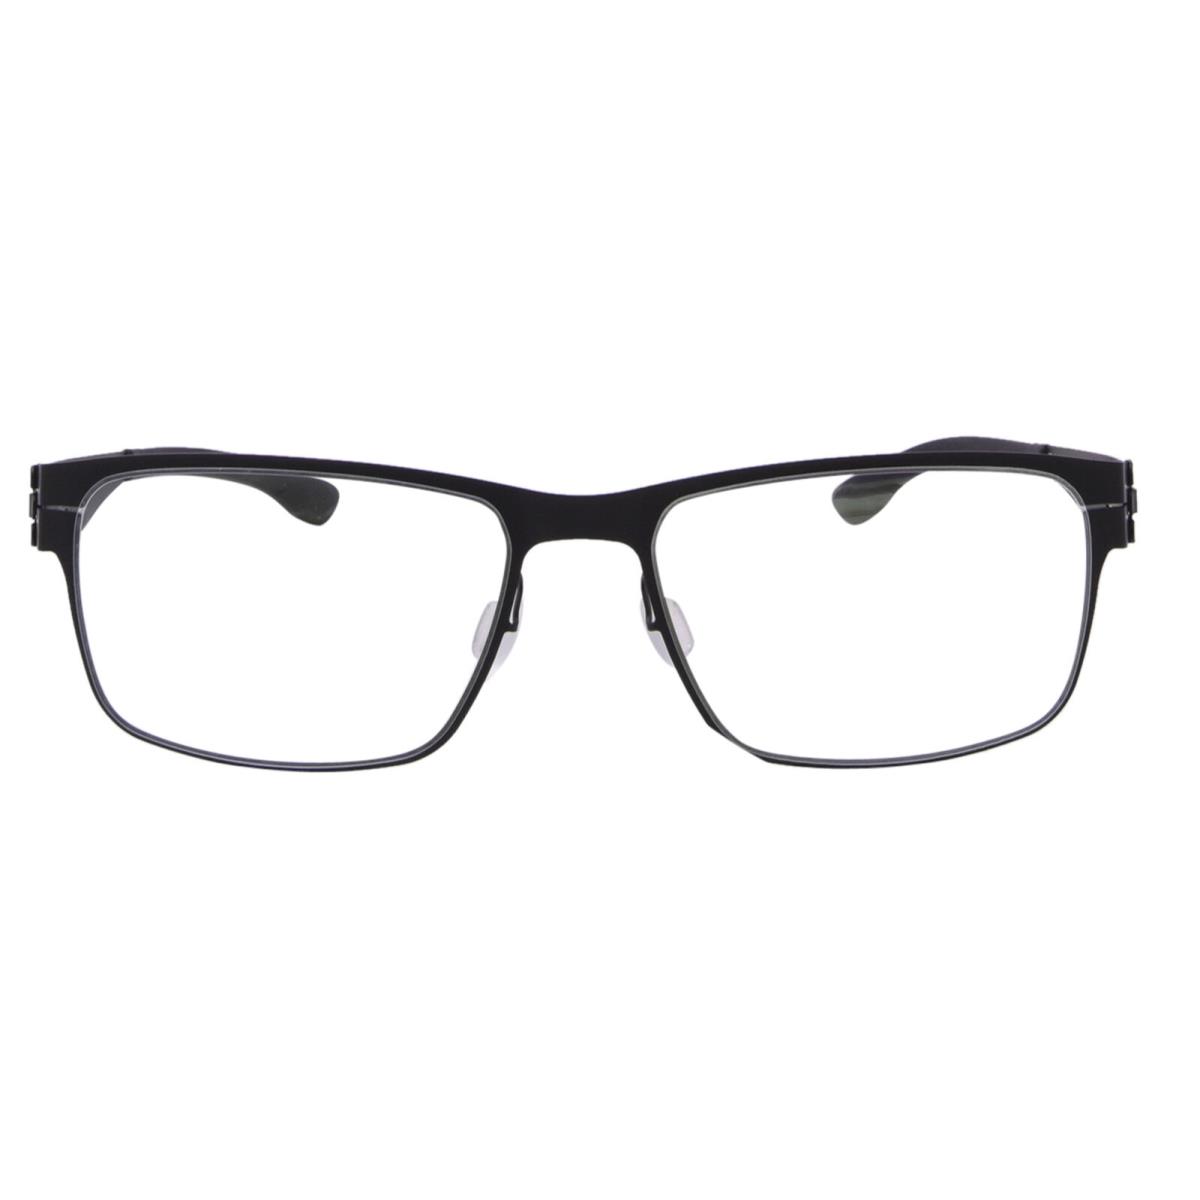 Ic Berlin Paul-r-large Eyeglasses Black Full Rim Rectangle Shape 56mm